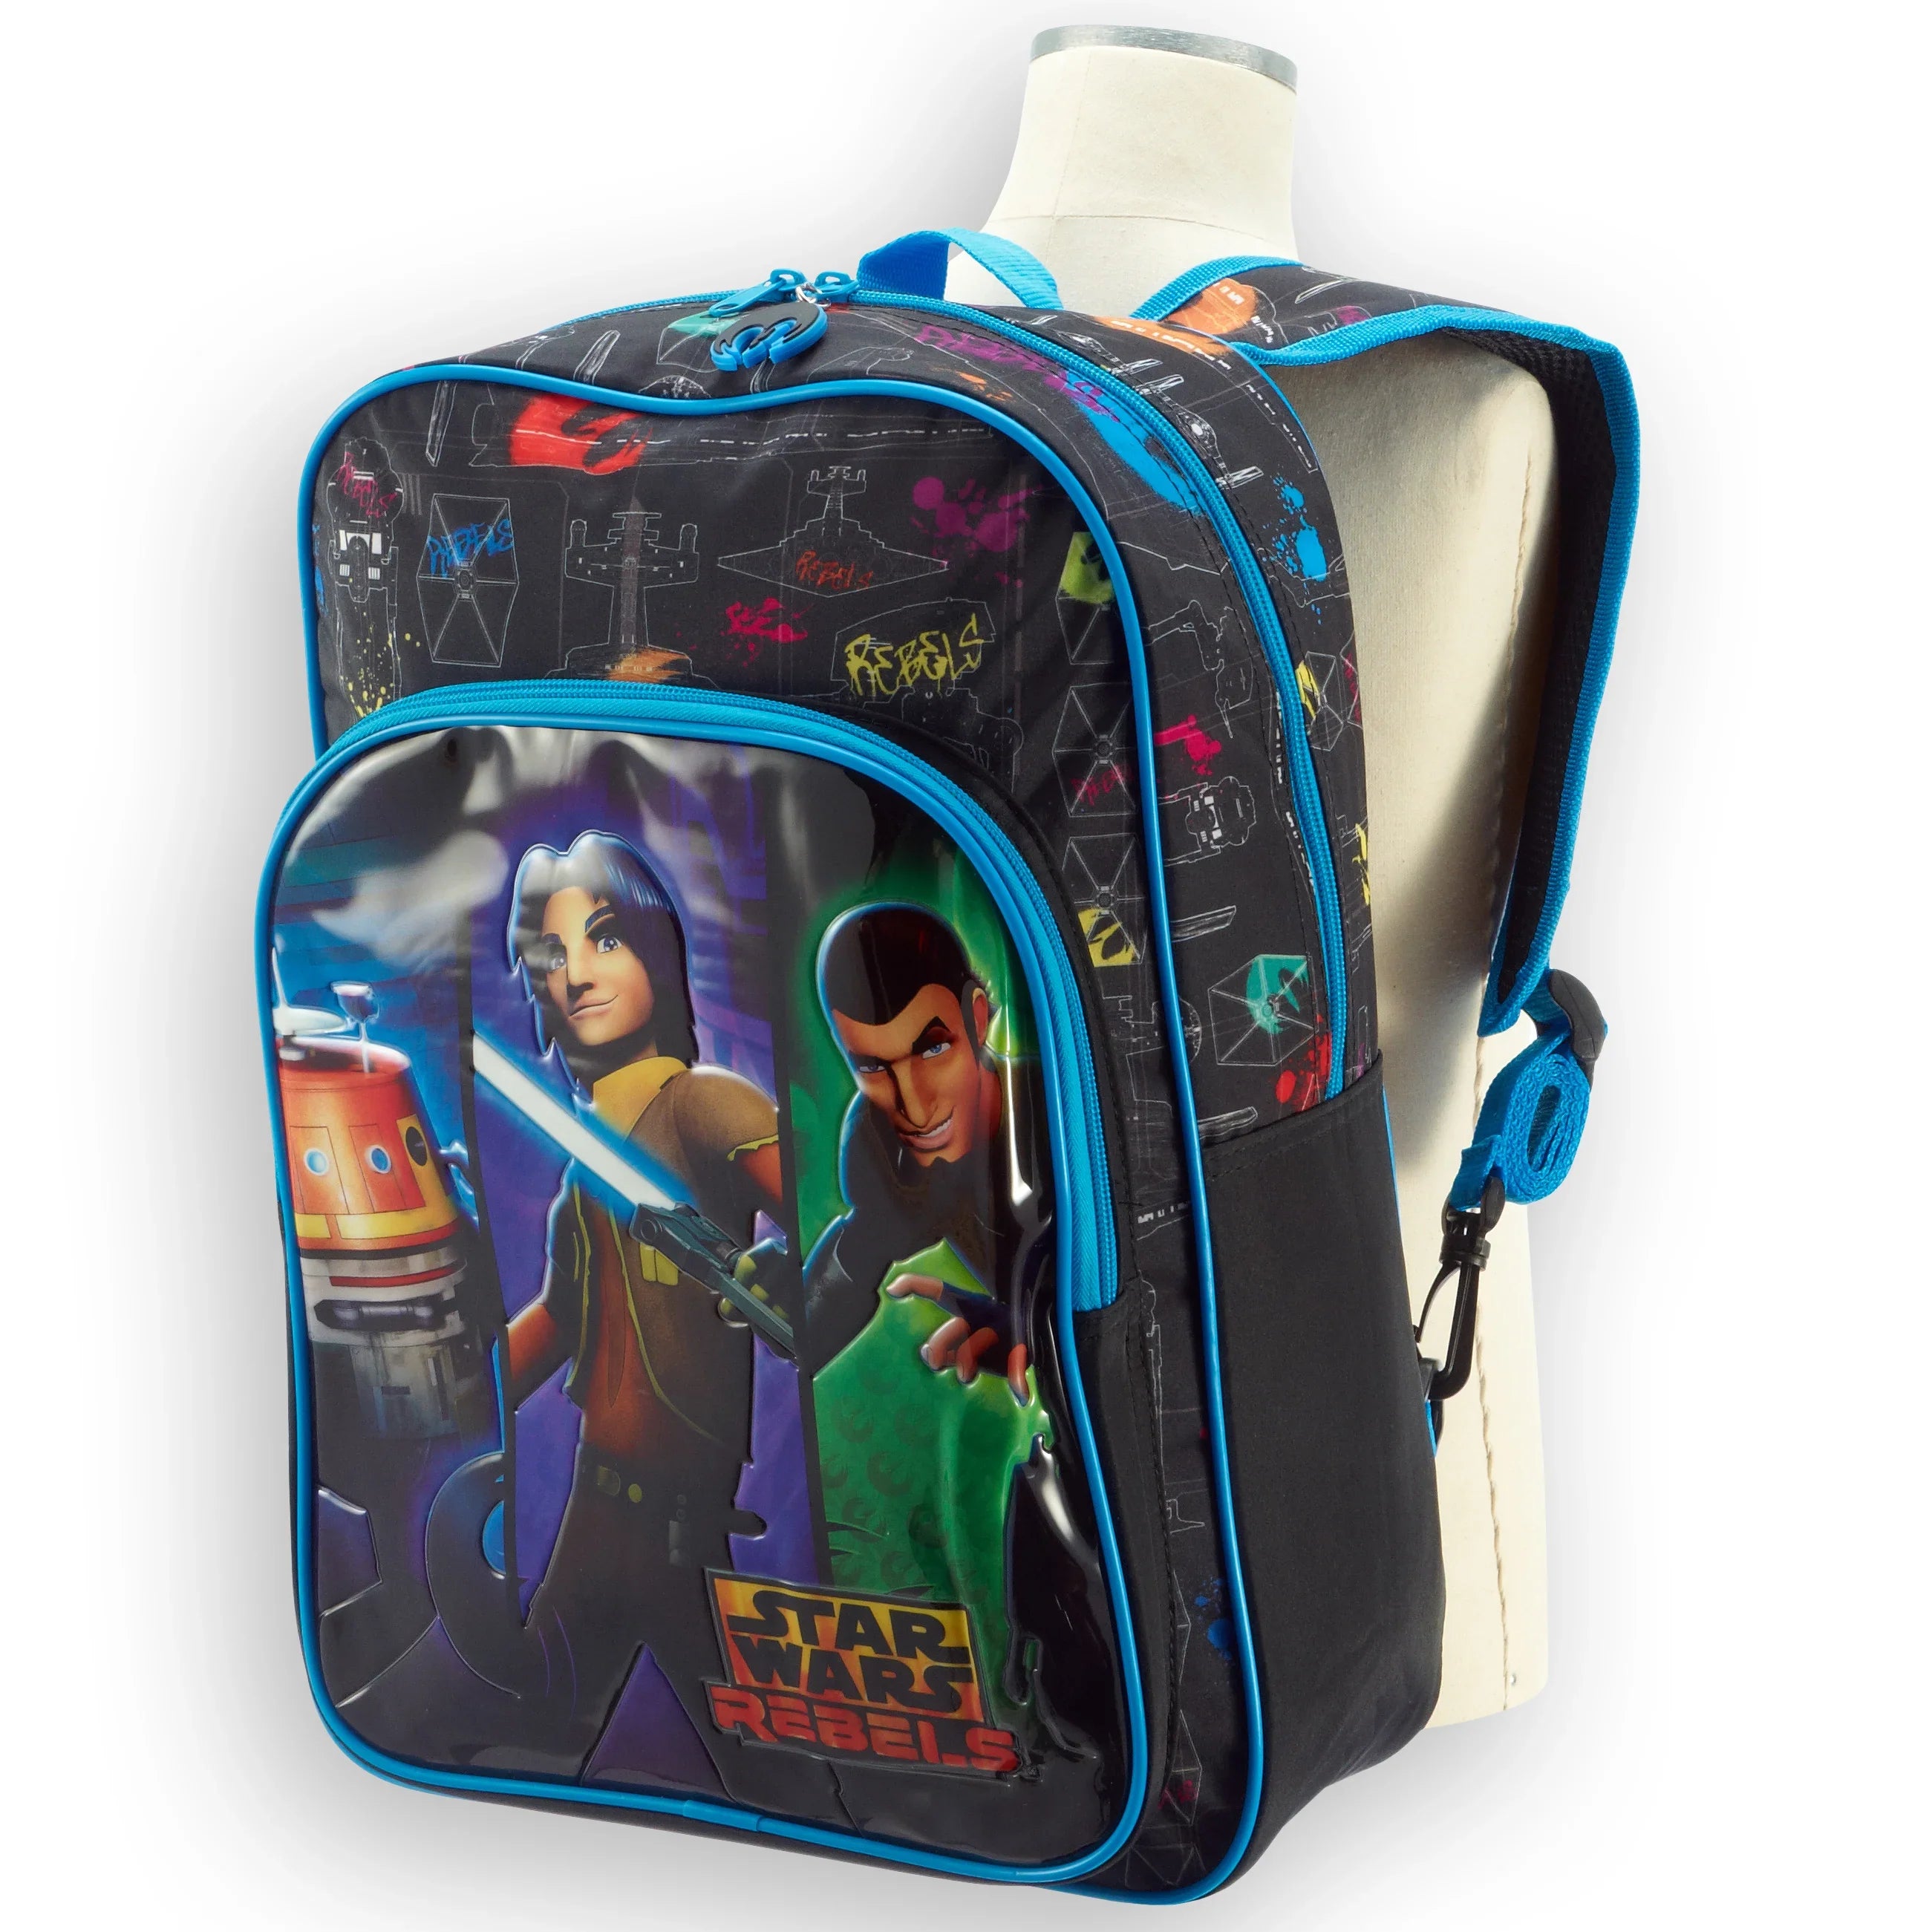 Disney Star Wars Rebels backpack 40 cm - colorful